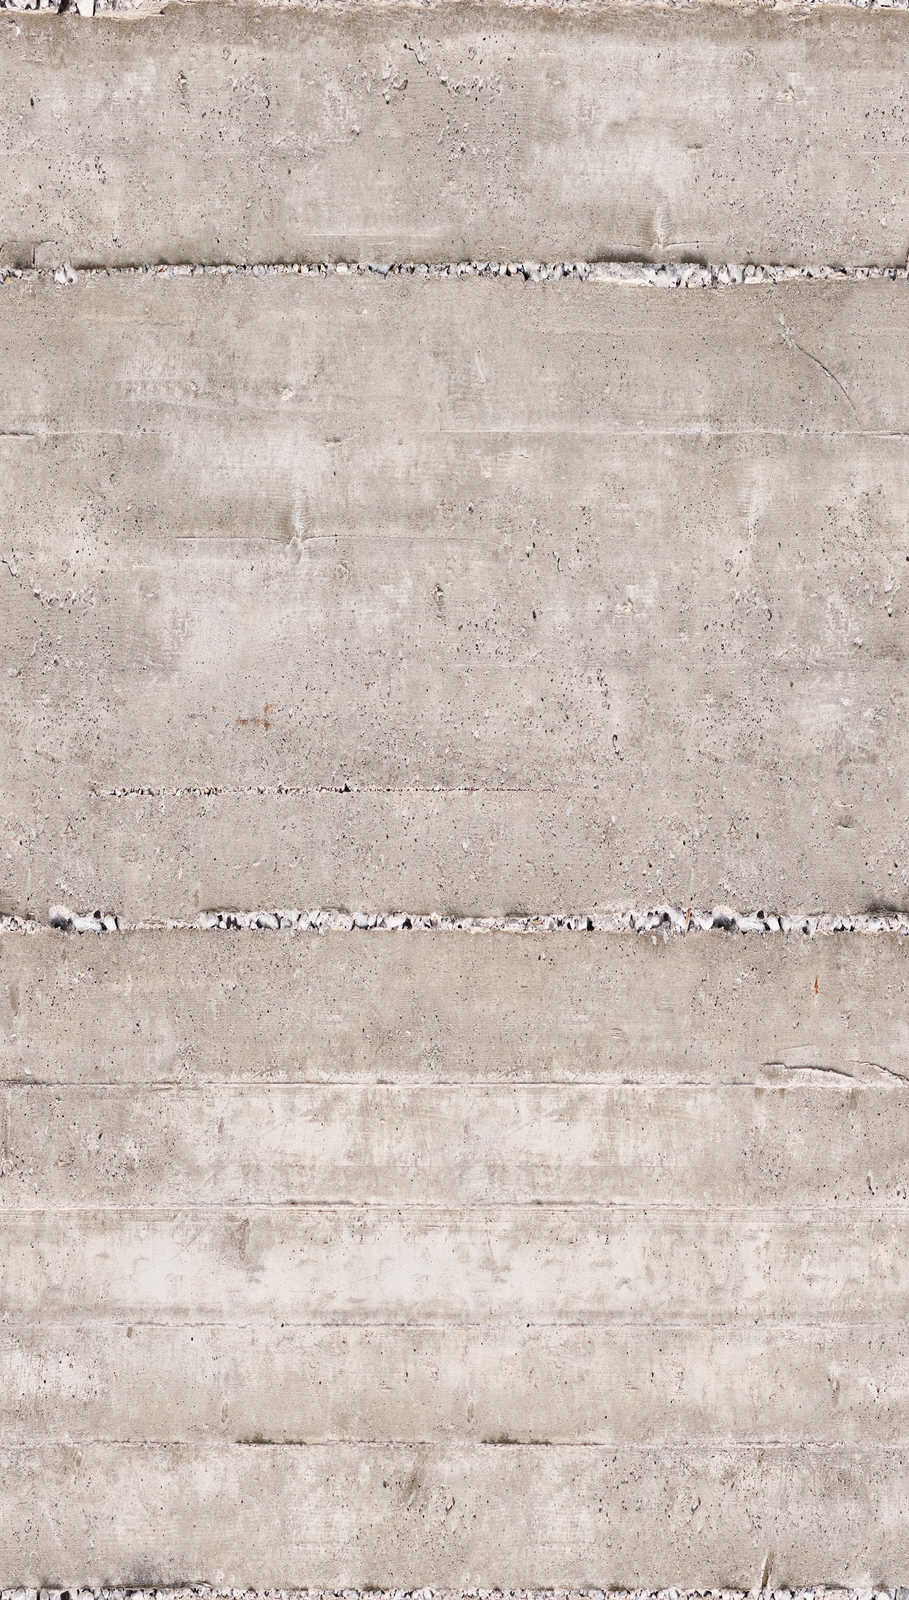             Concrete-look wallpaper in light colours - grey, cream
        